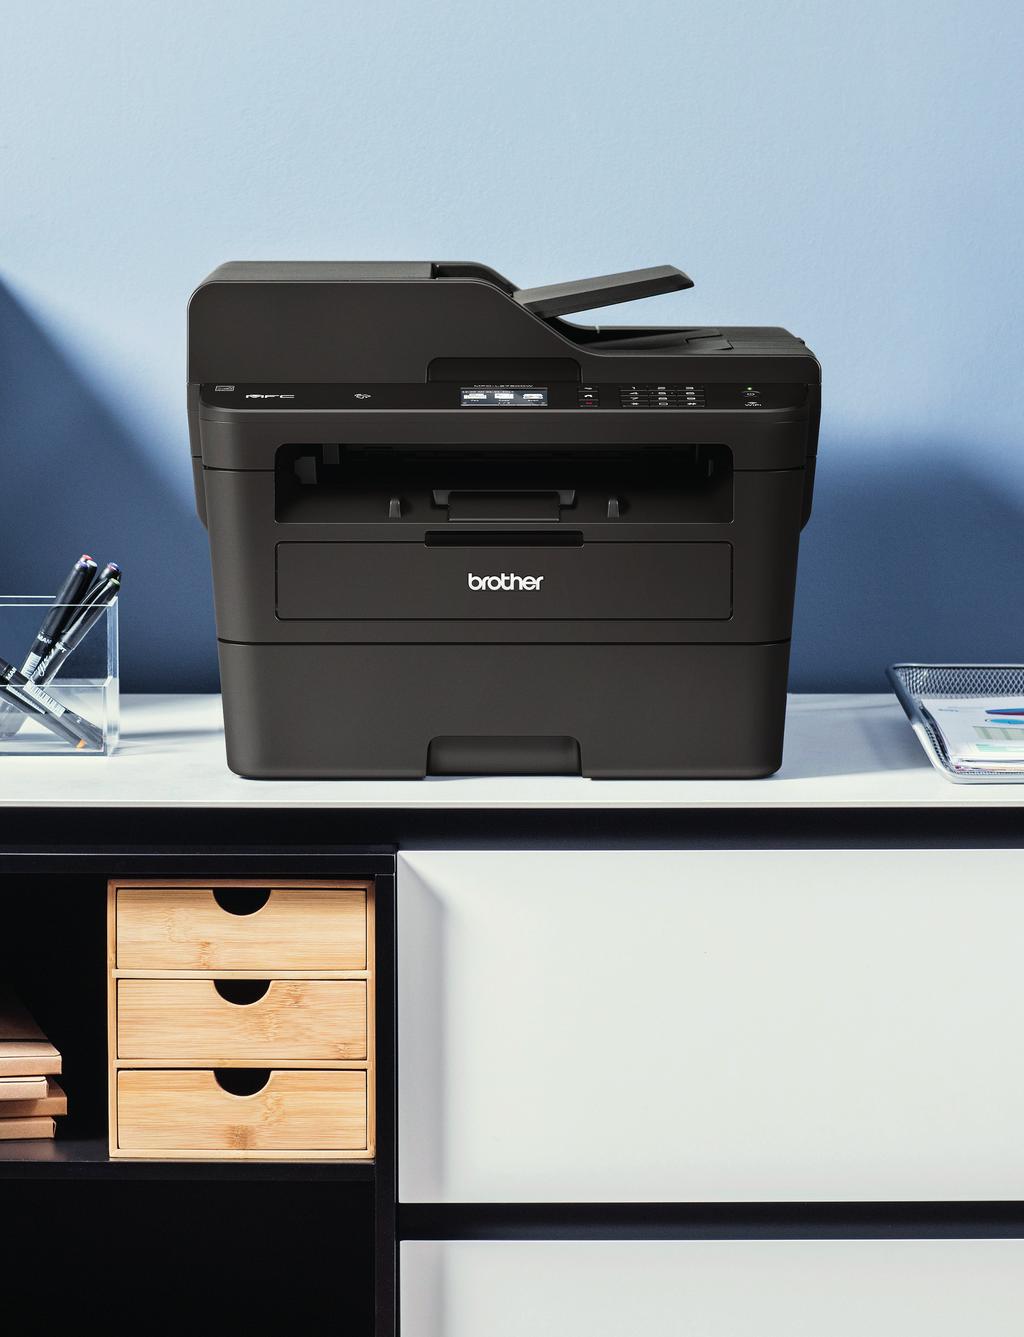 Compact 4-in-1 mono laser printer